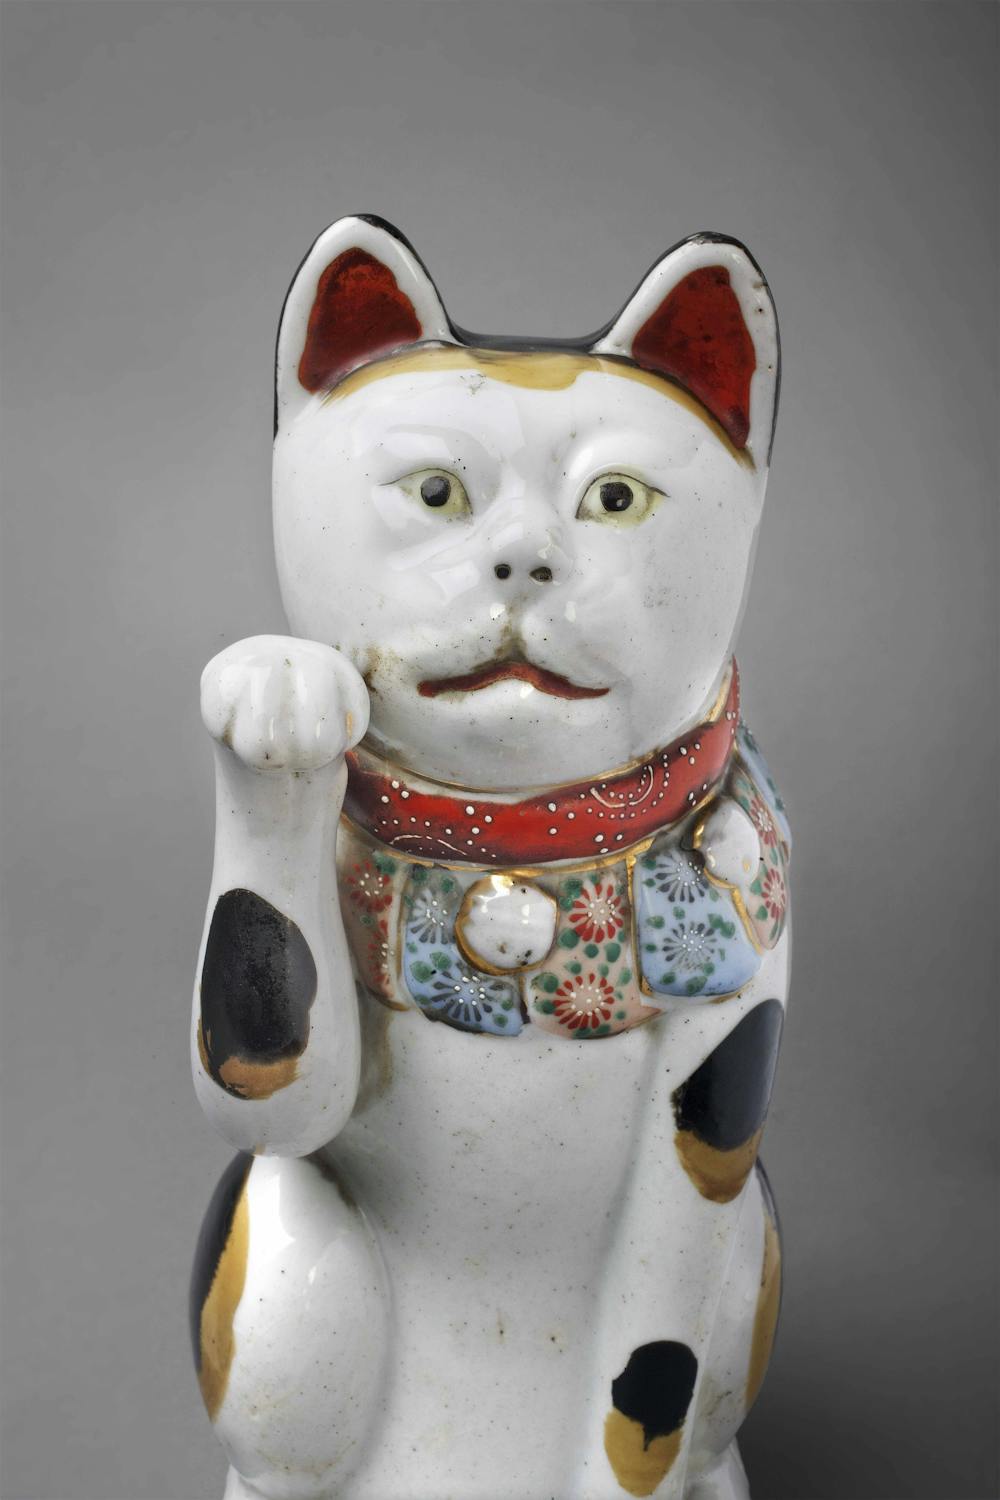 What is the story of maneki-neko, the Japanese beckoning cat?